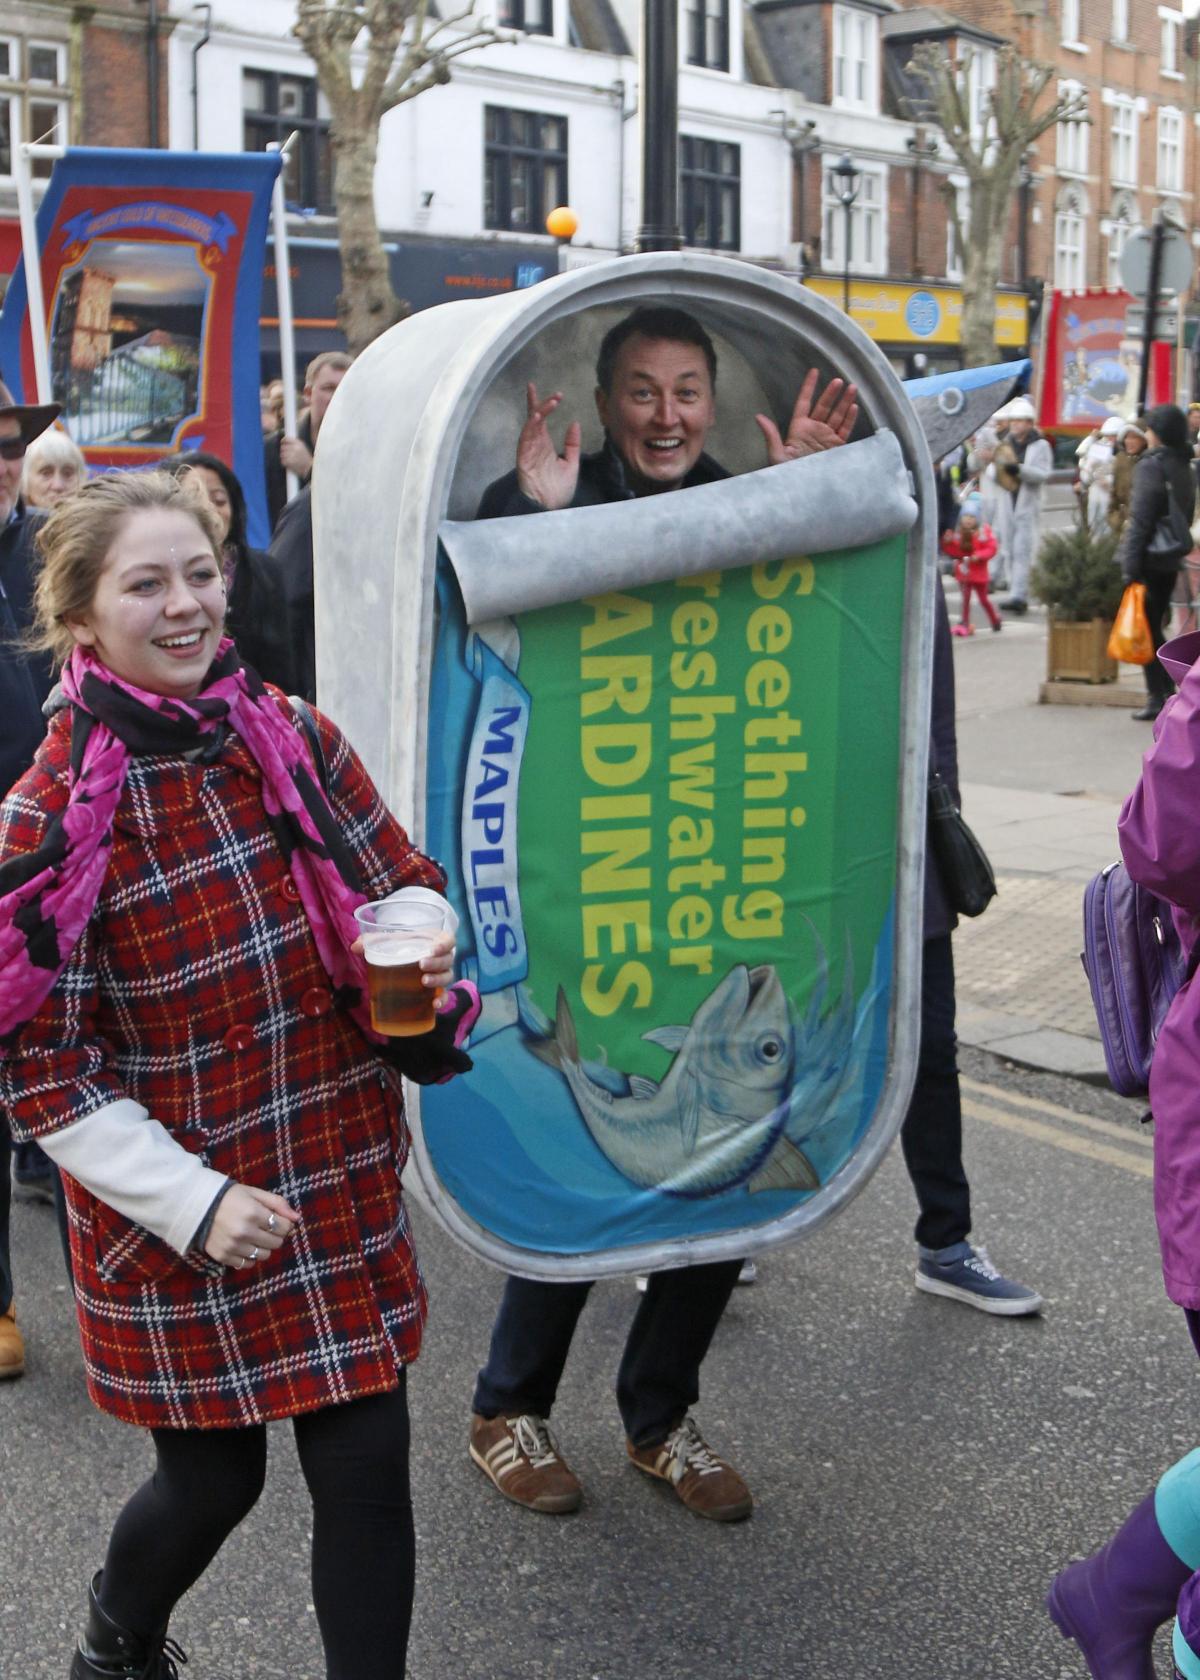 A tin of sardines merrily trod the streets of Surbiton